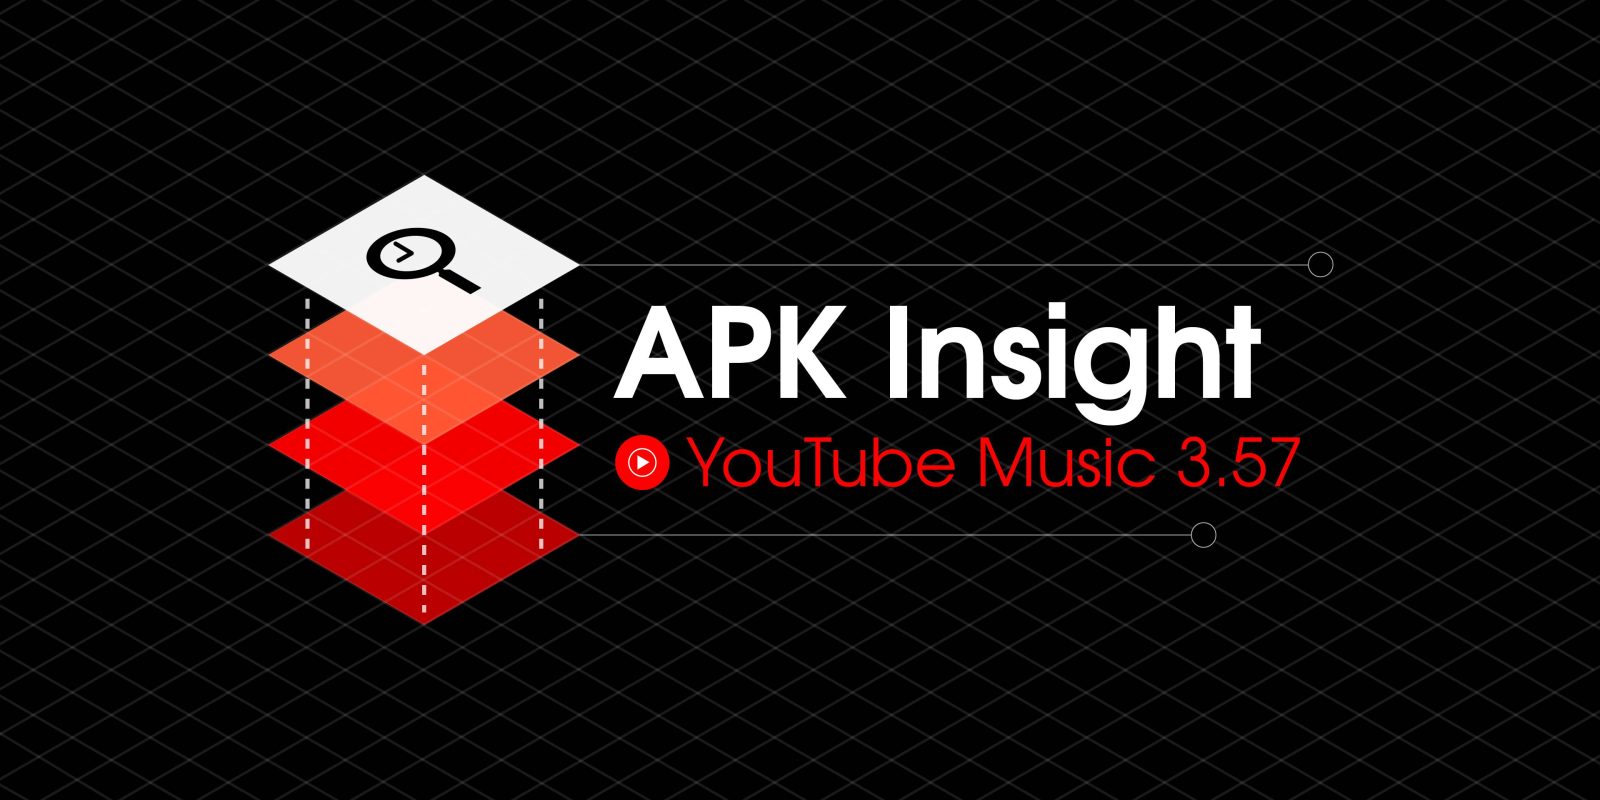 YouTube Music collaborative playlists